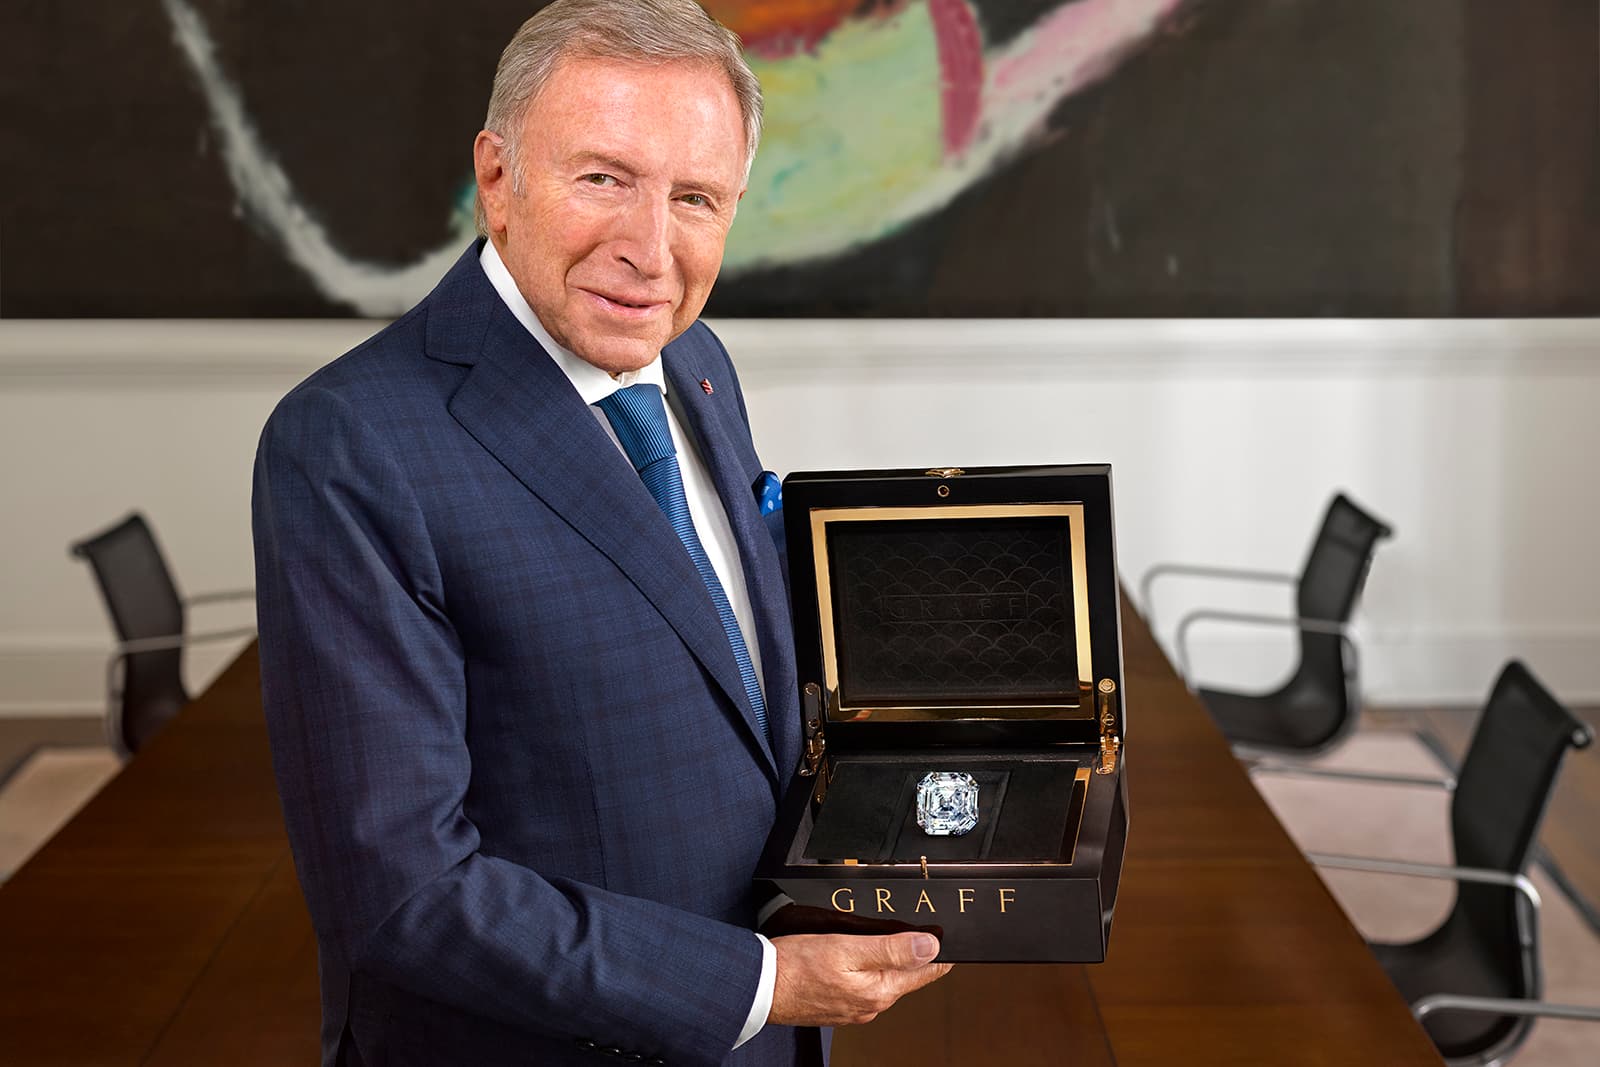 Laurence Graff, founder and chairman of Graff, unveils the 302.37 carat Graff Lesedi La Rona